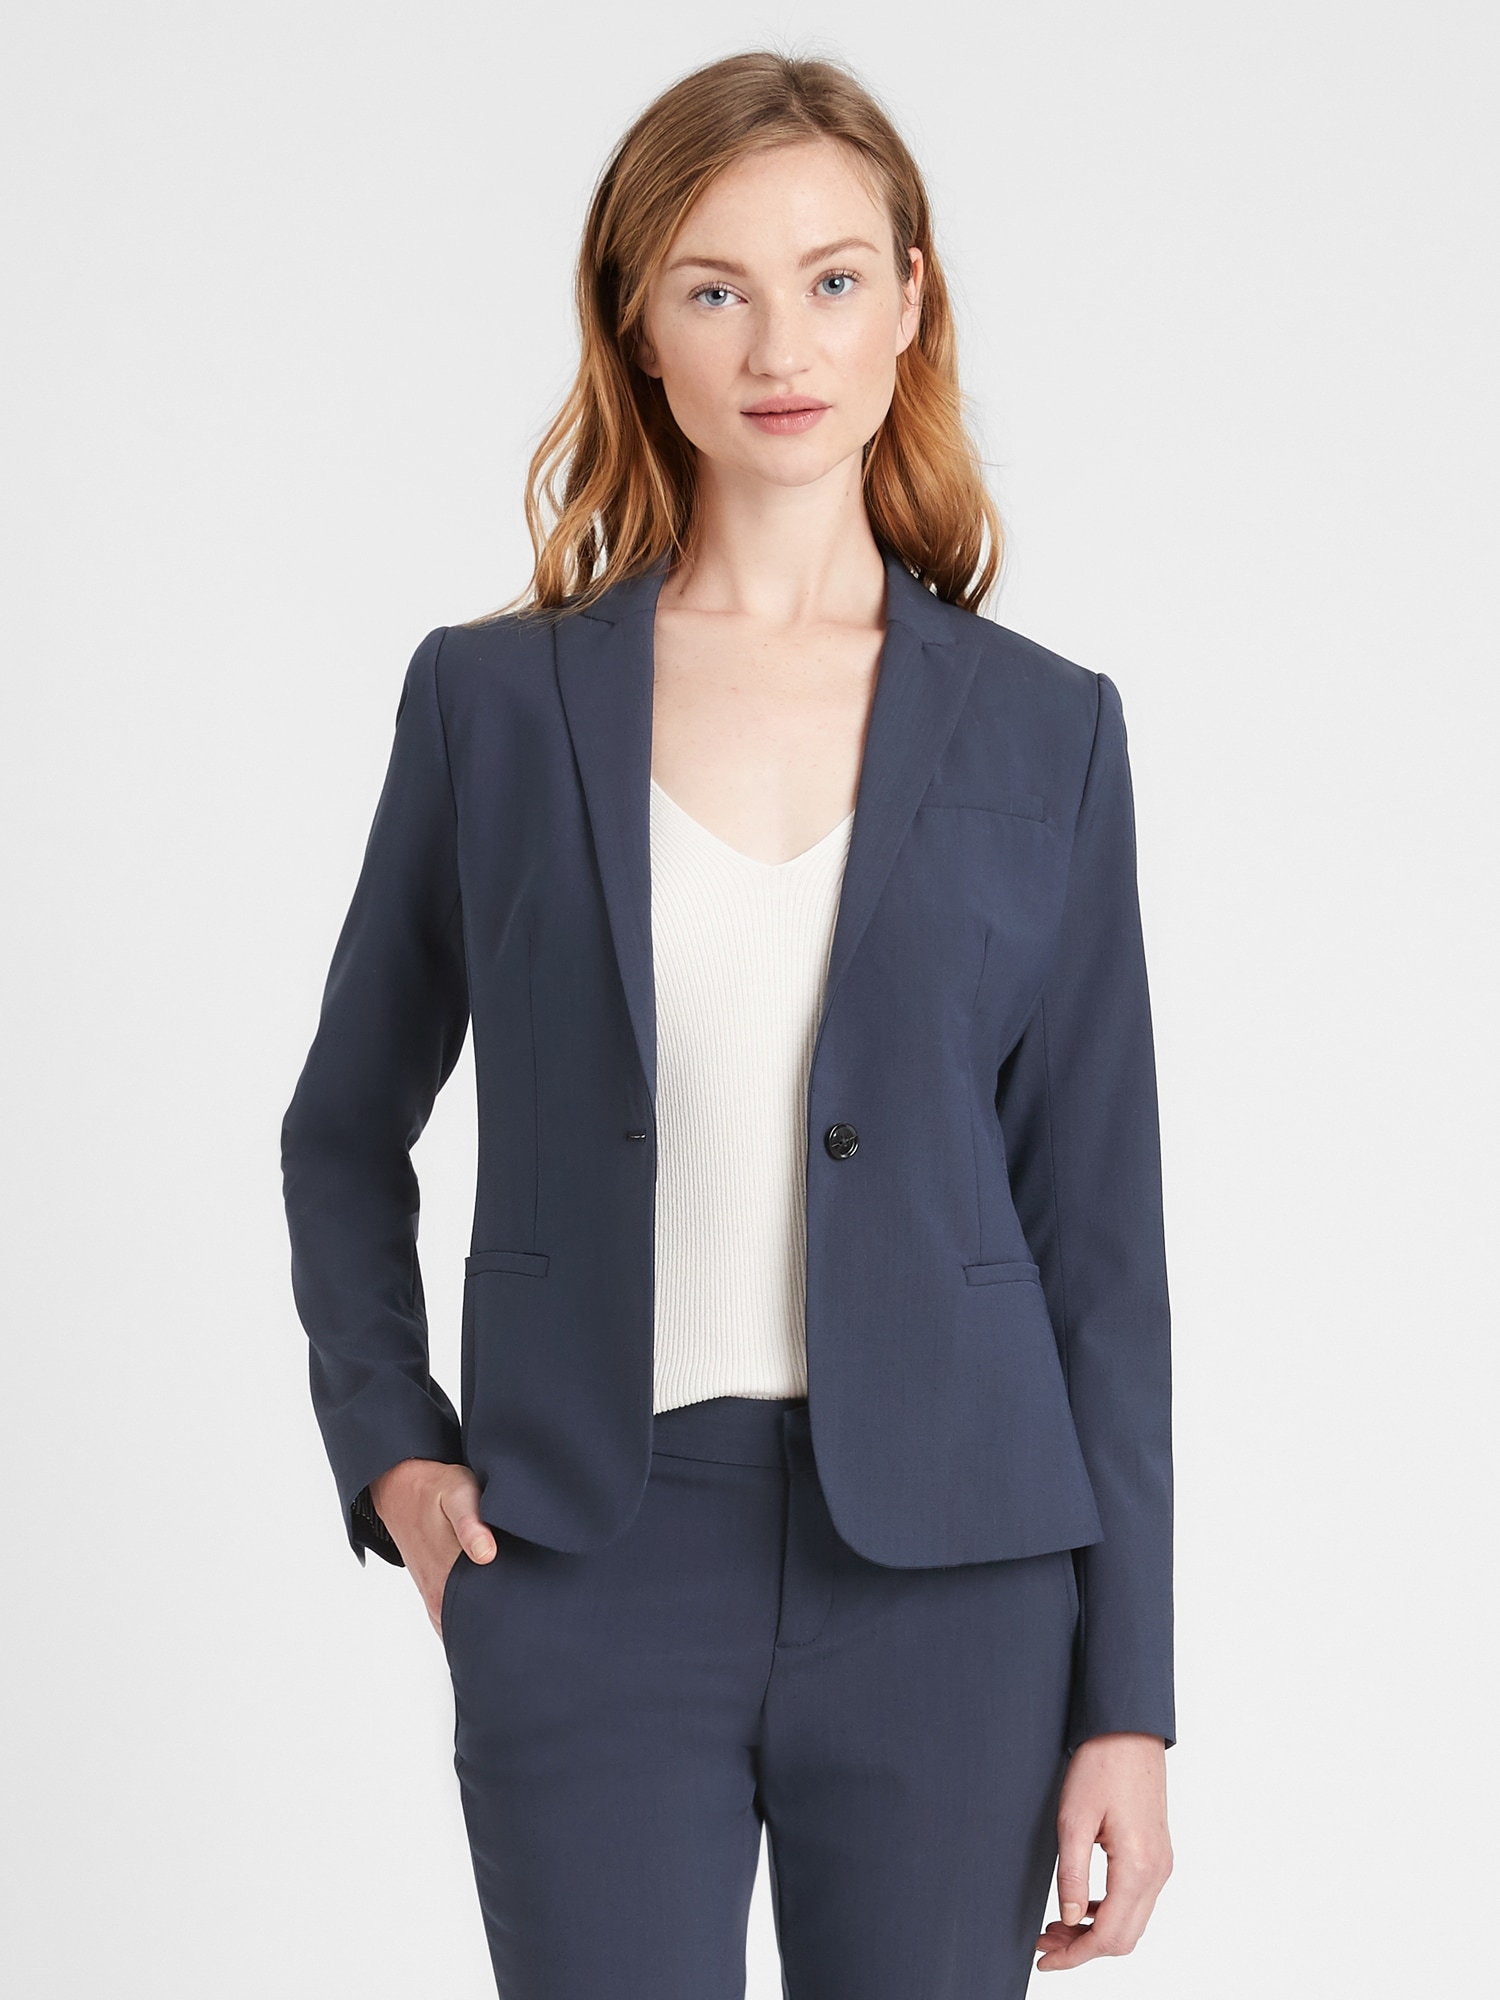 Penmanship embrace Unauthorized Women's Tall Business Jackets & Blazers